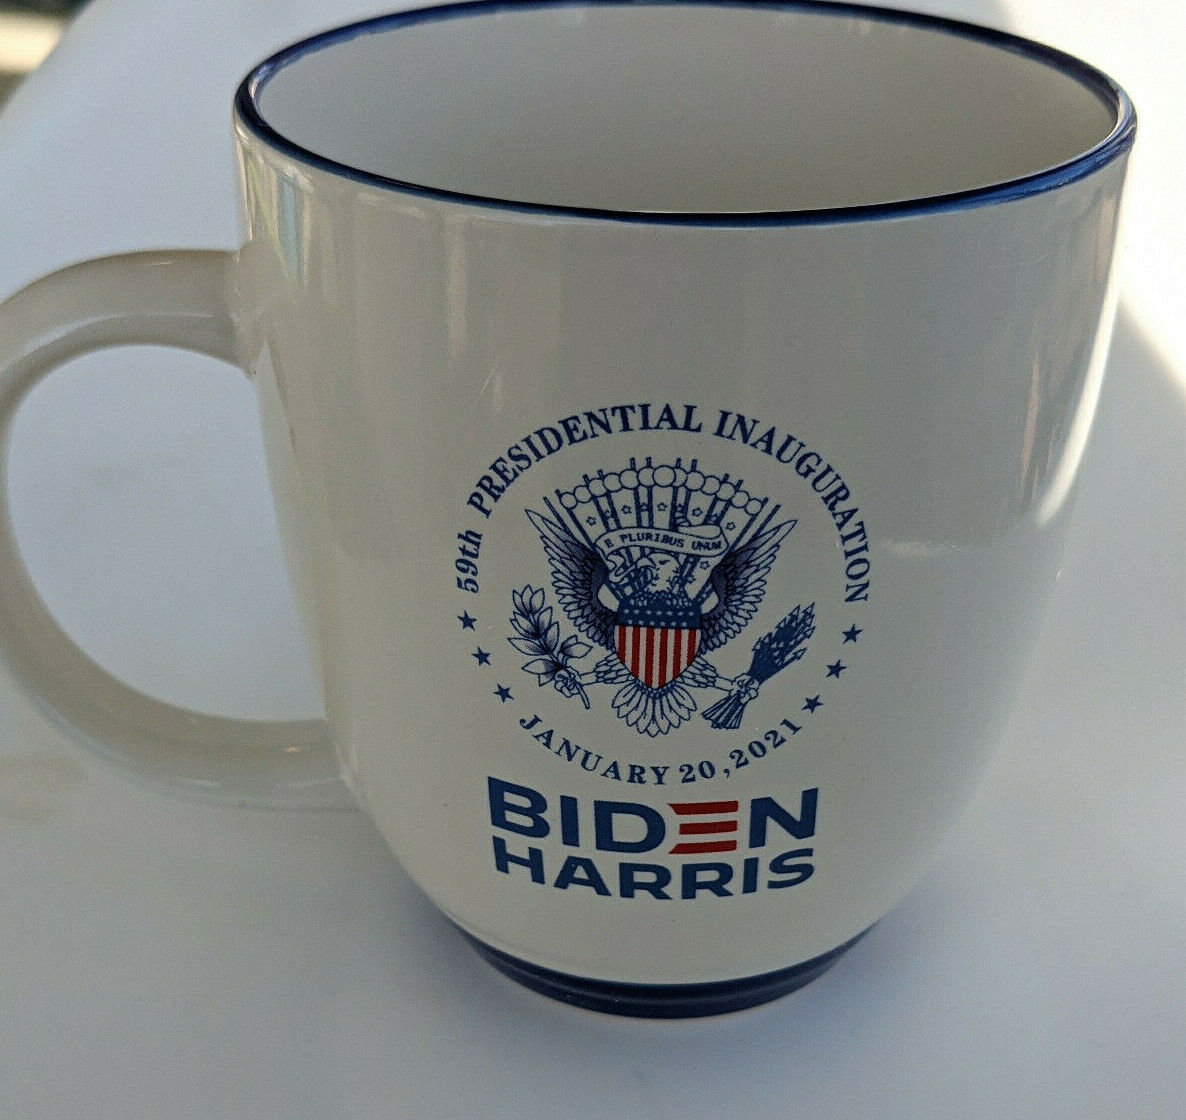 Biden Harris 59th Presidential Inauguration Coffee Mug January 20, 2021 NEW 